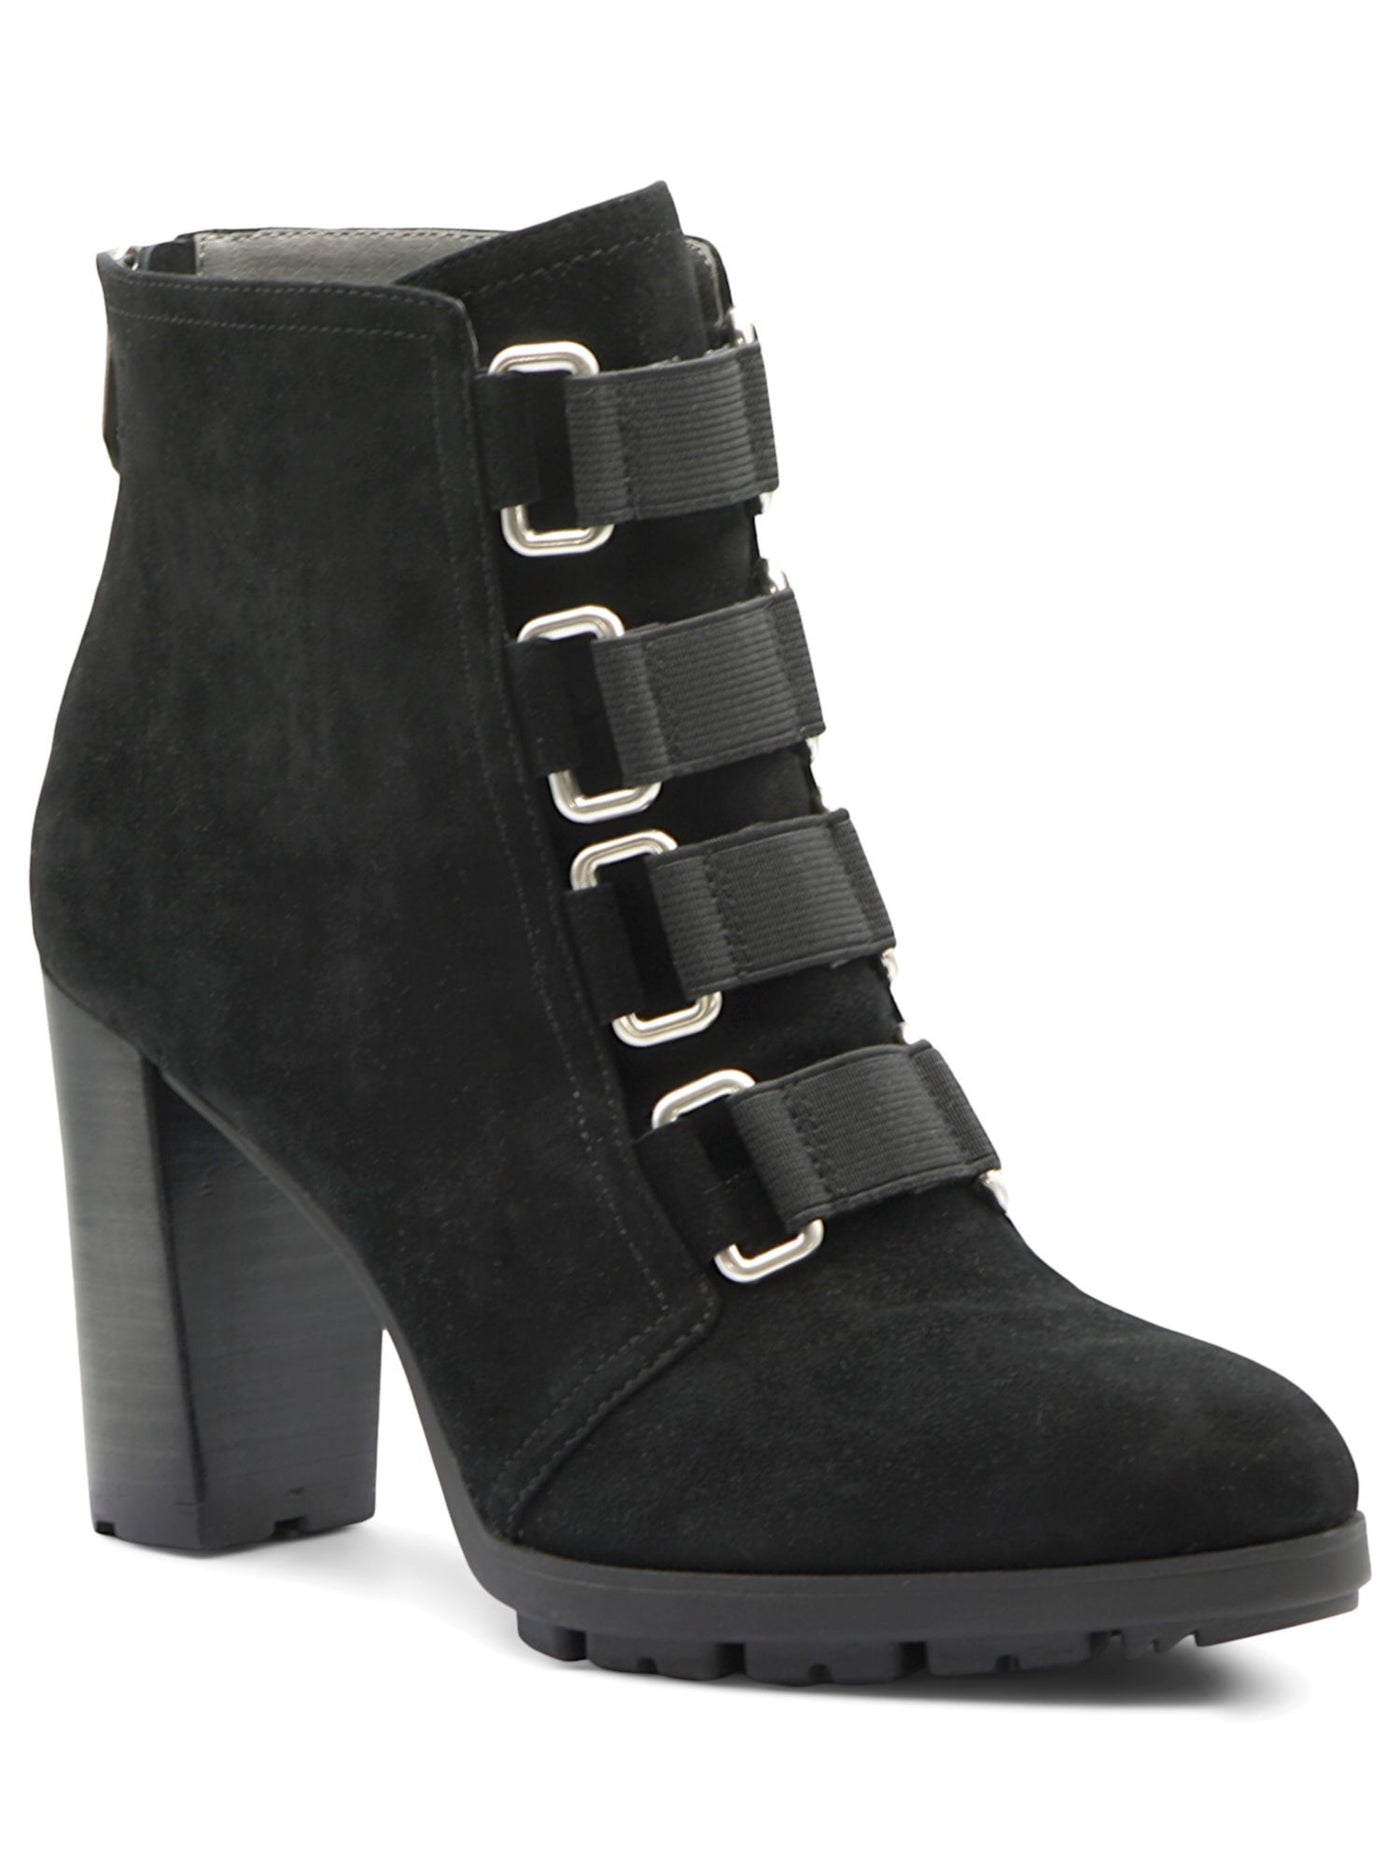 ADRIENNE VITTADINI Womens Black Almond Toe Block Heel Zip-Up Leather Heeled Boots 10 M